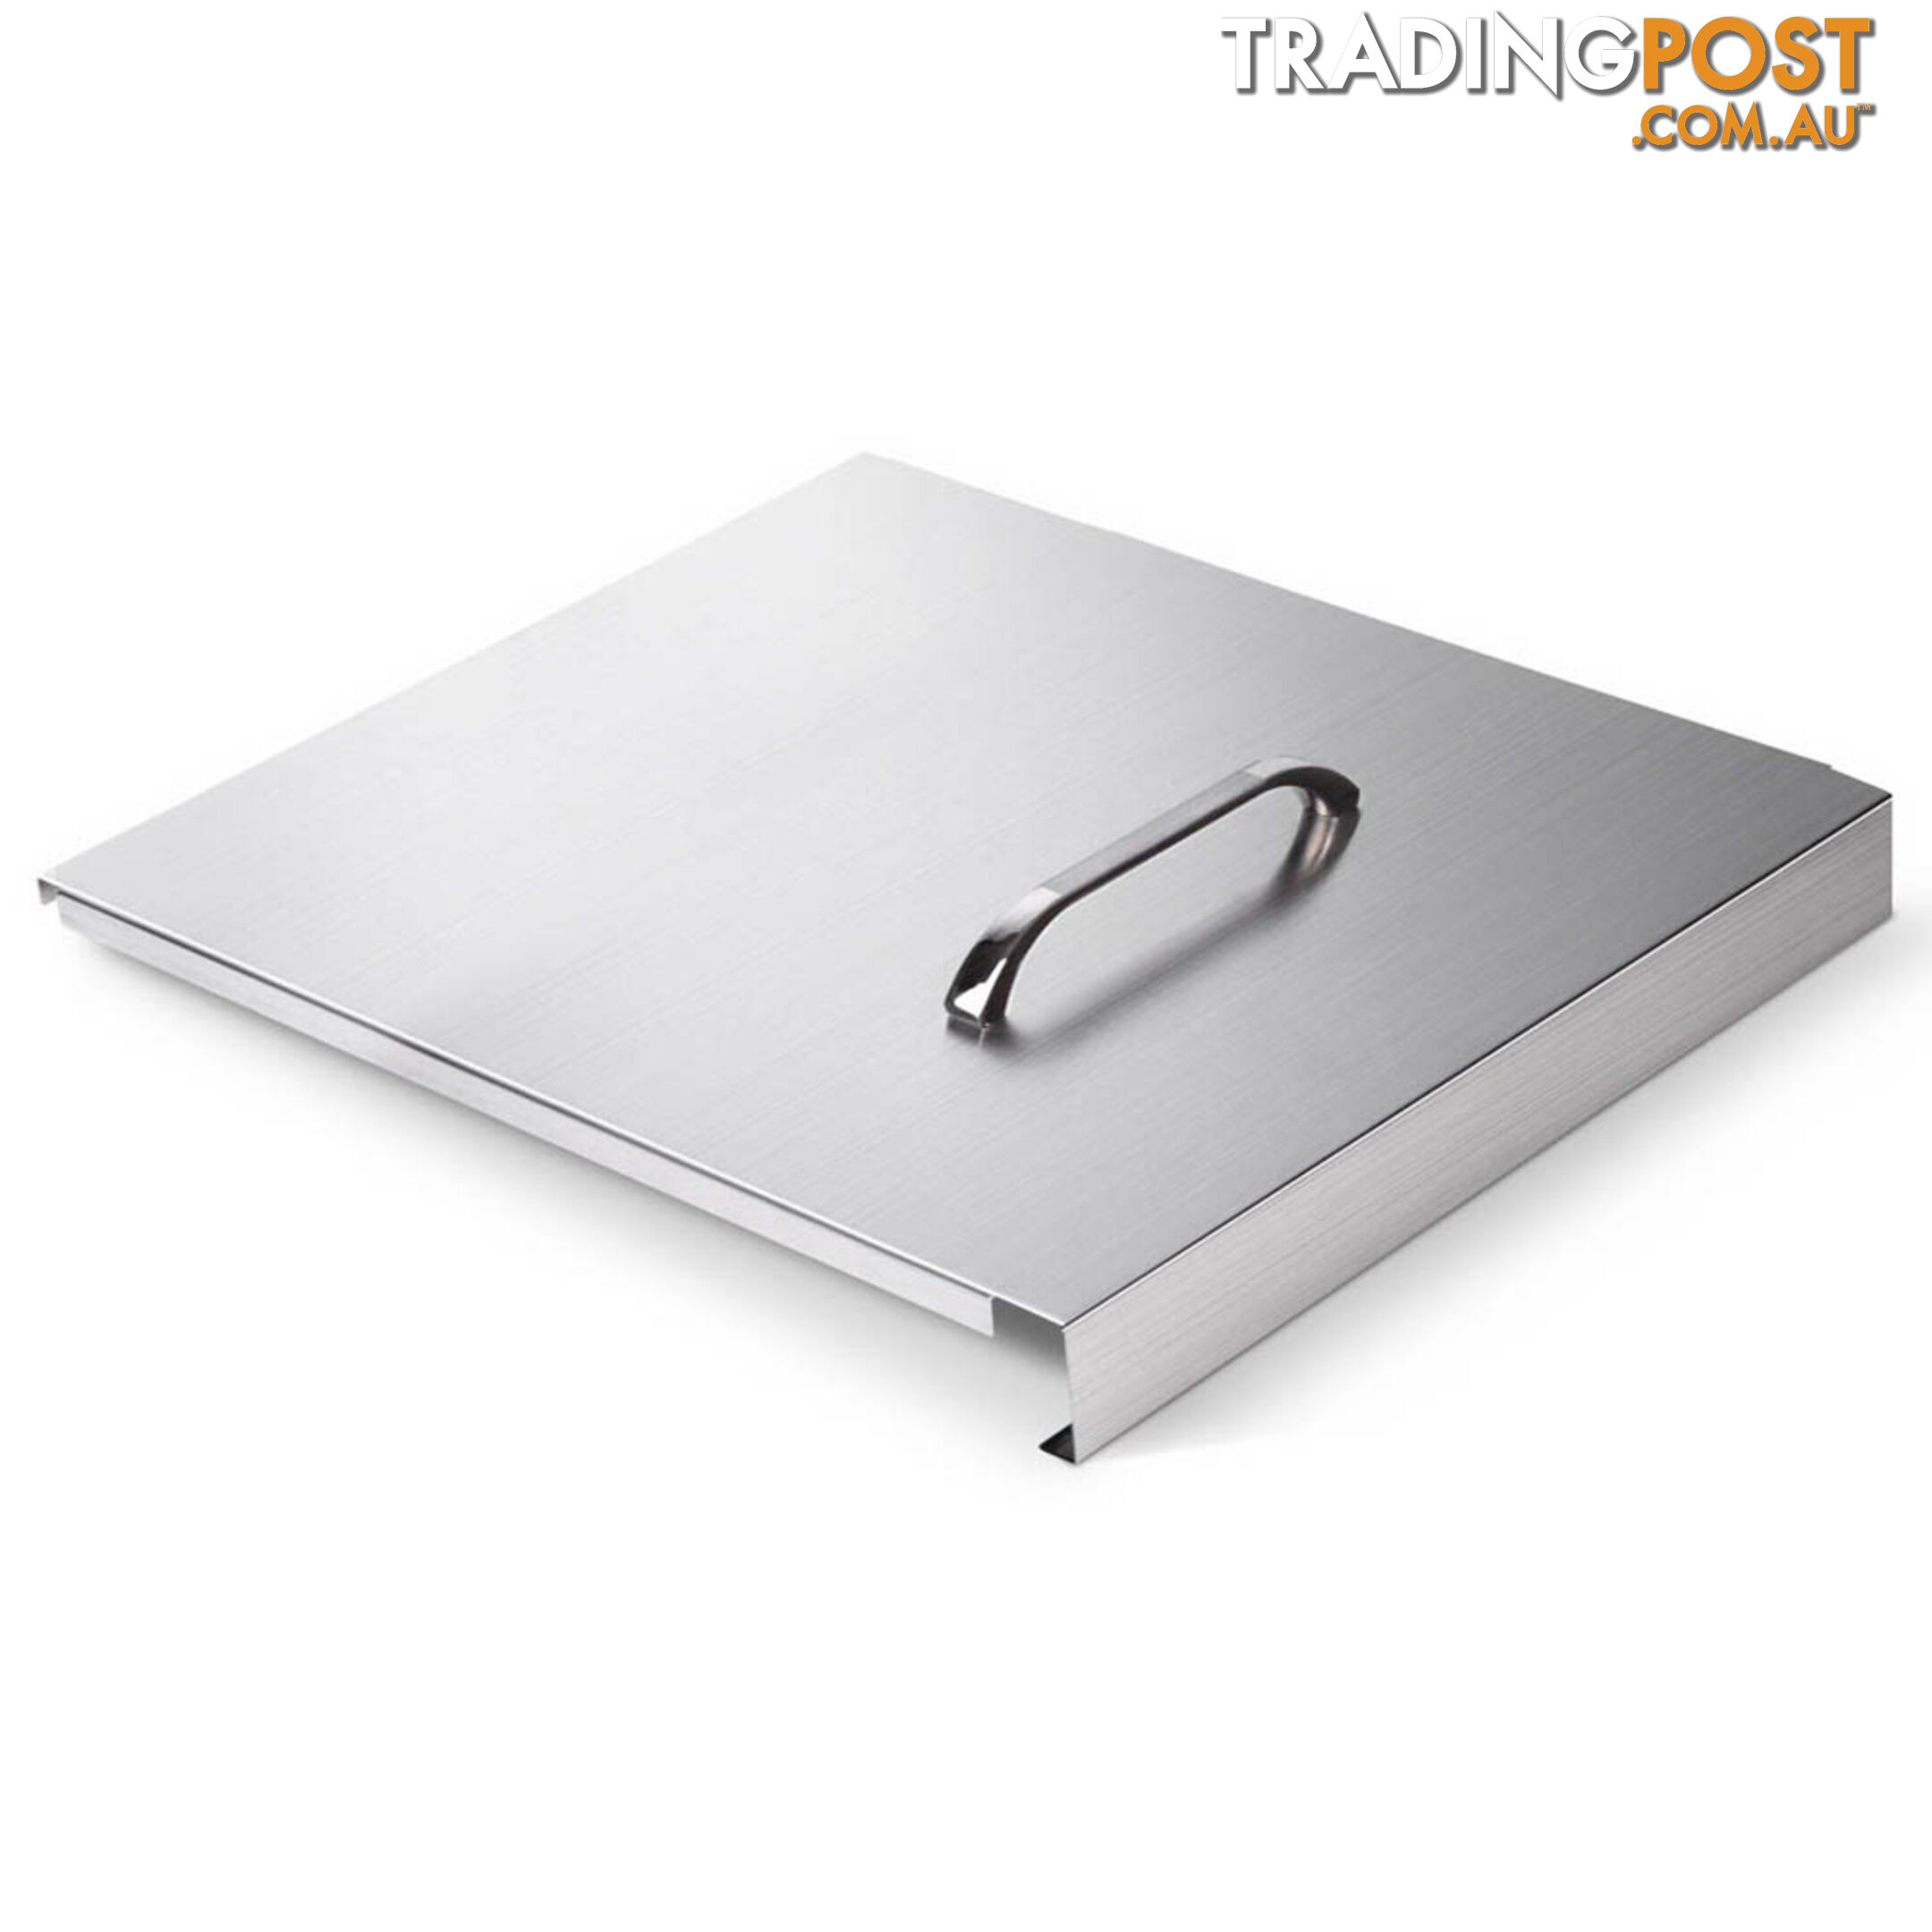 Stainless Steel Food Dehydrator _ 10 Trays